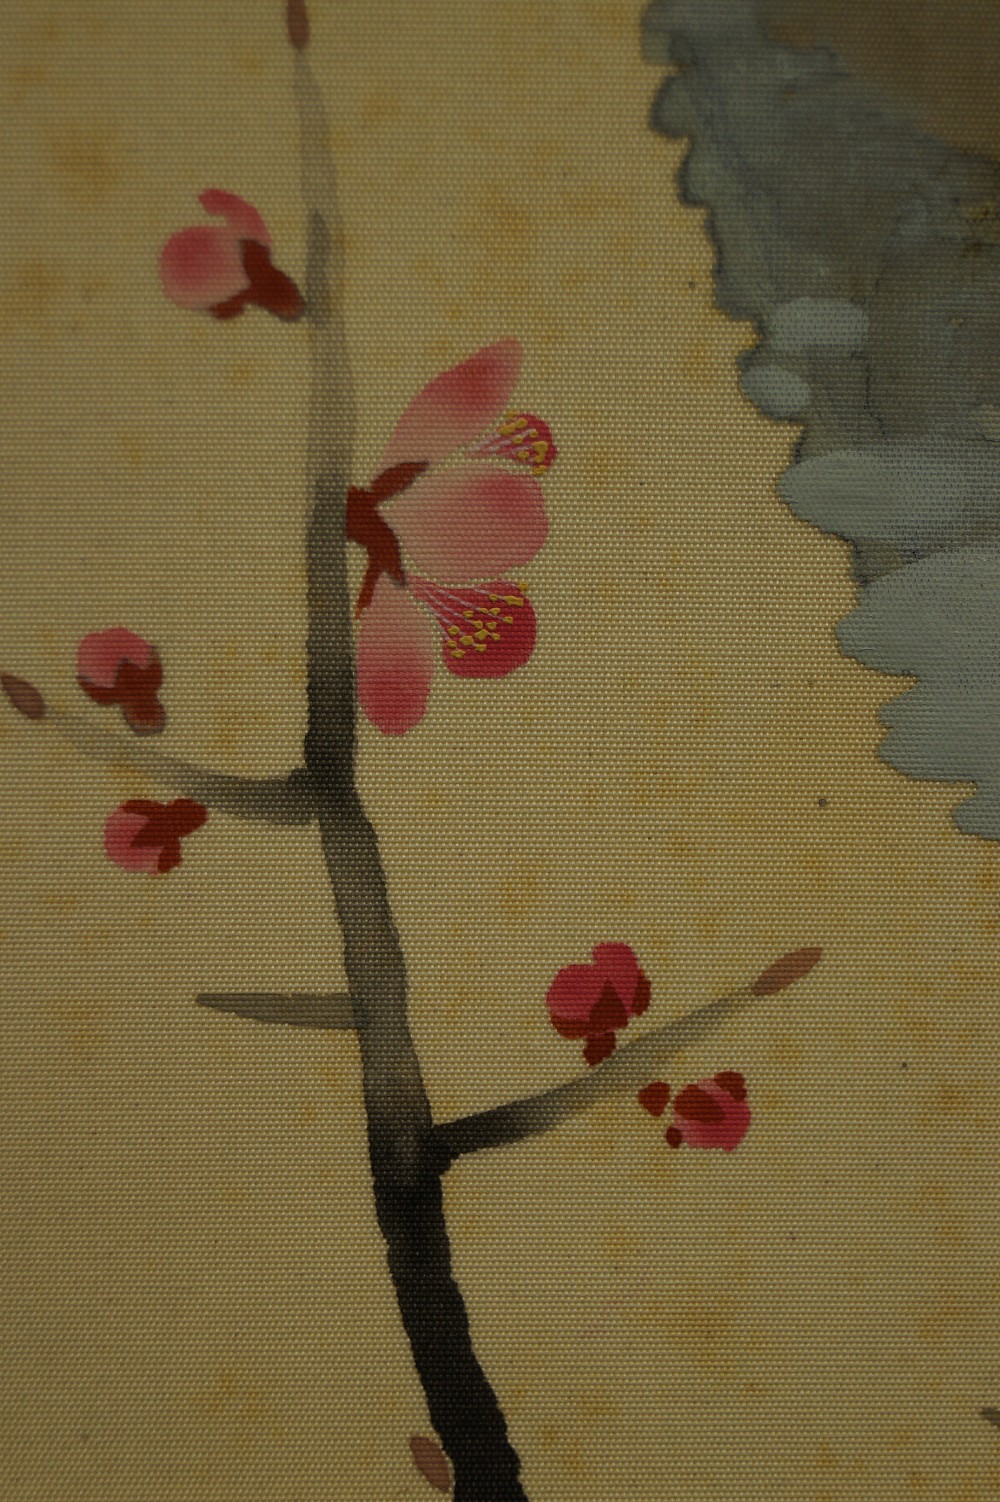 Spatzen und Pflaumenblüten - Japanisches Rollbild (Kakejiku, Kakemono)